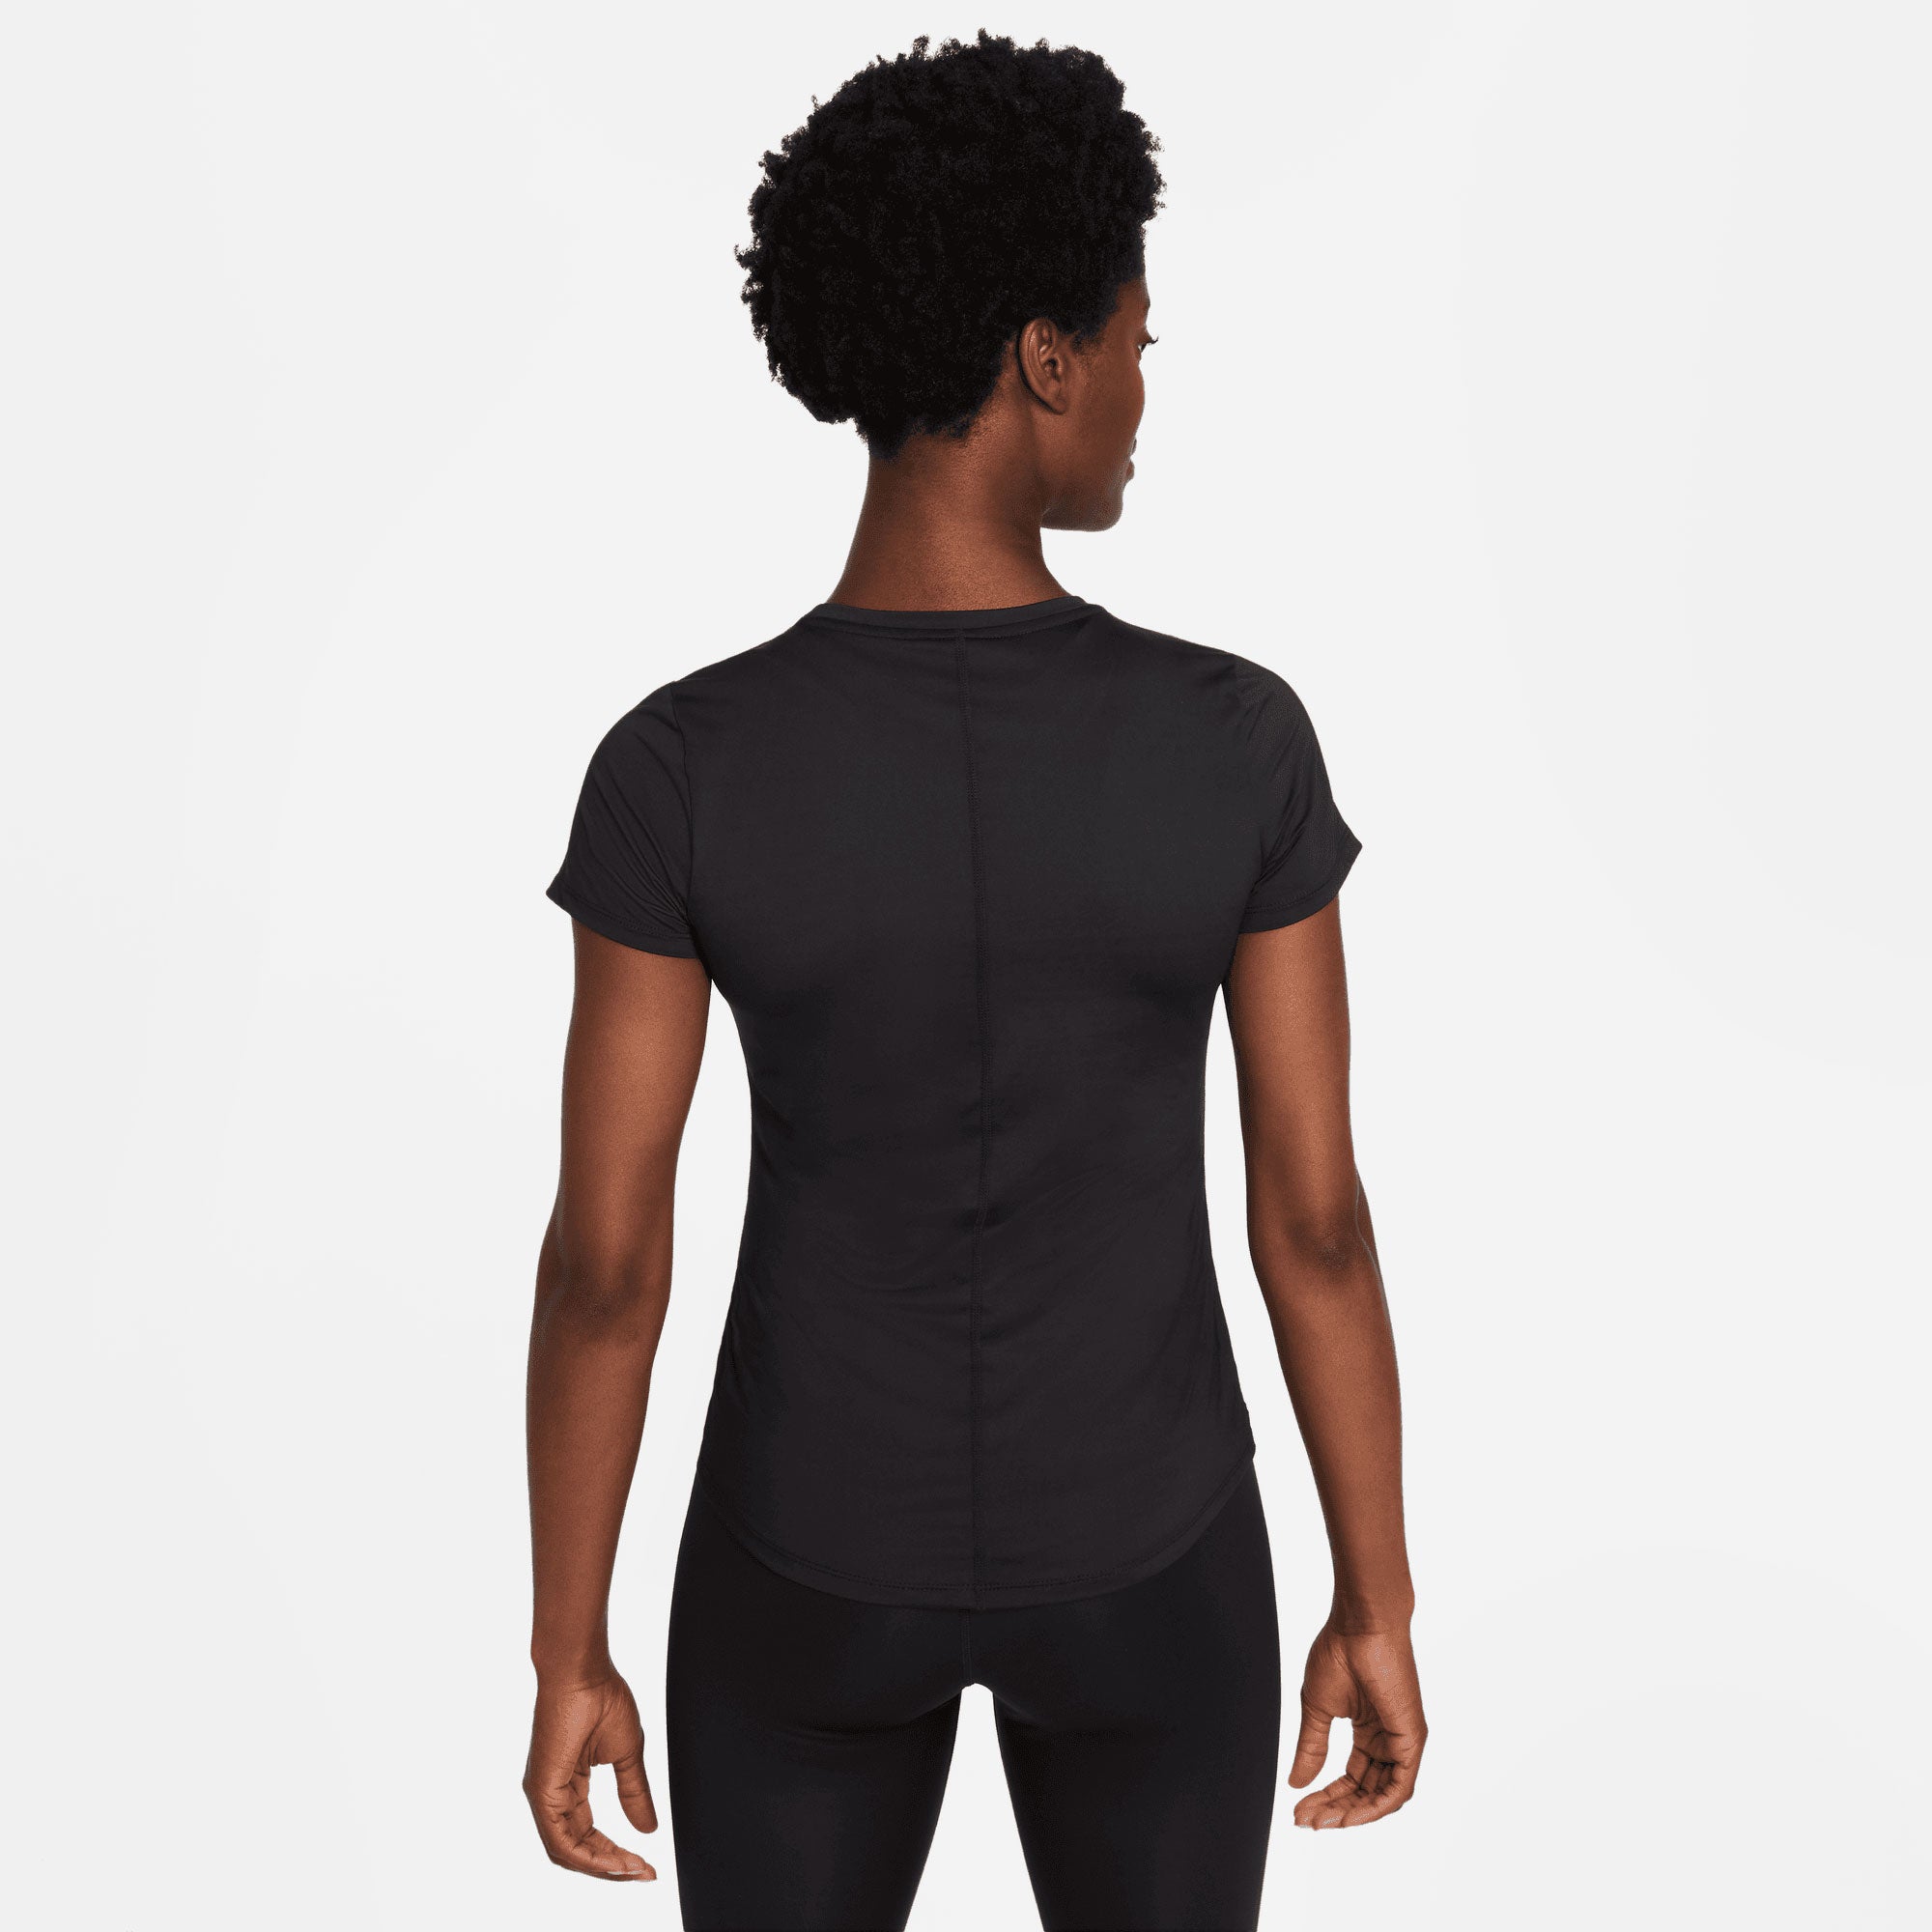 Nike One Dri-FIT Women's Slim Top Black (2)